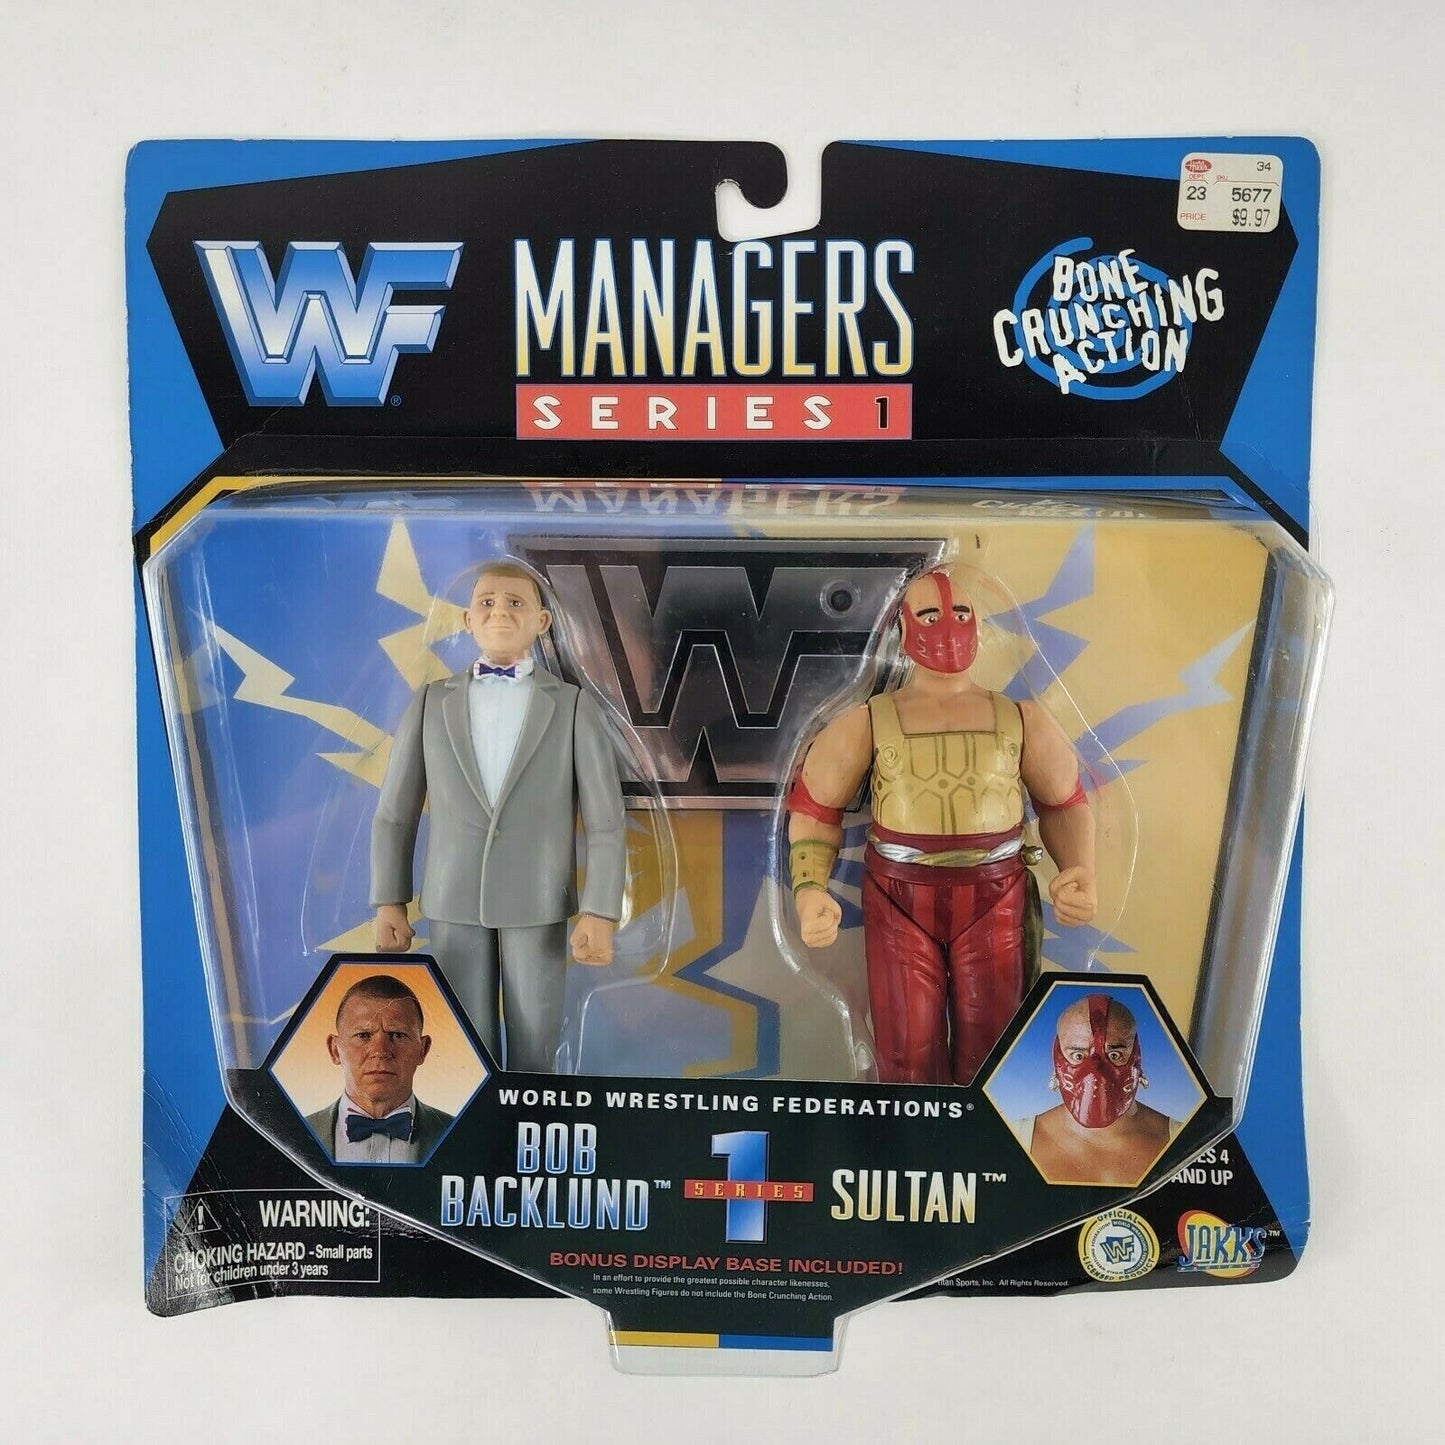 1997 WWF Jakks Pacific Managers Series 1: Bob Backlund & Sultan